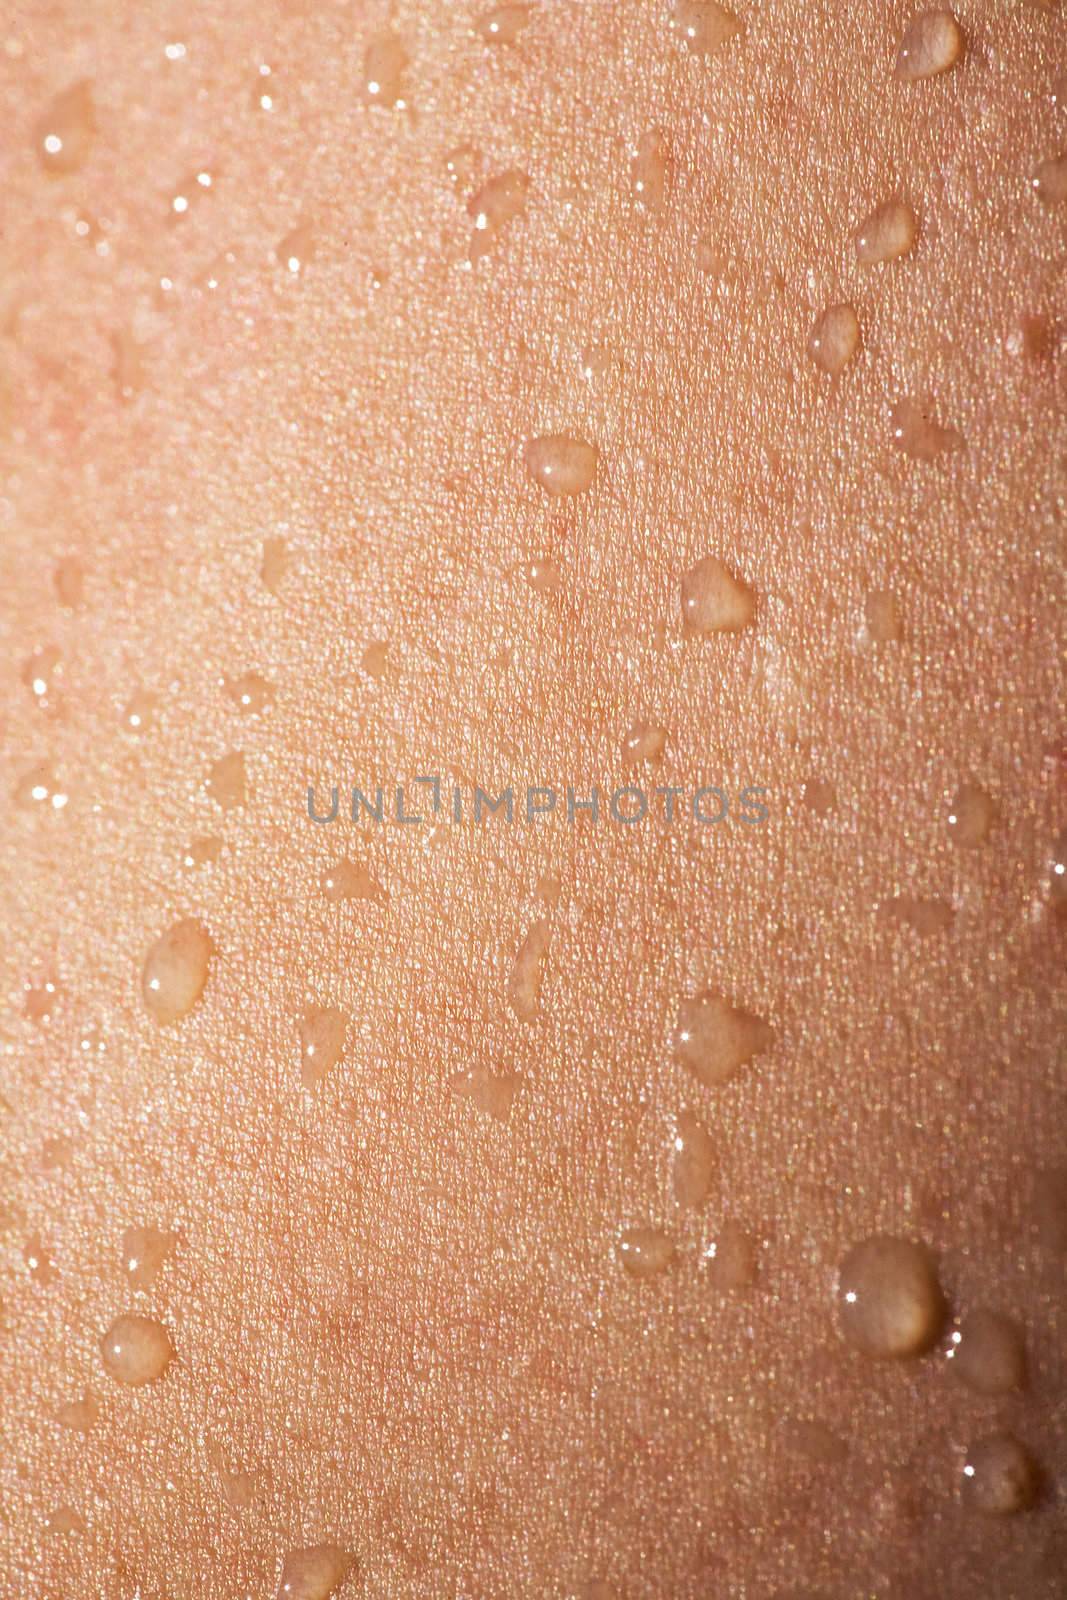 Water on Skin Detail by leaf